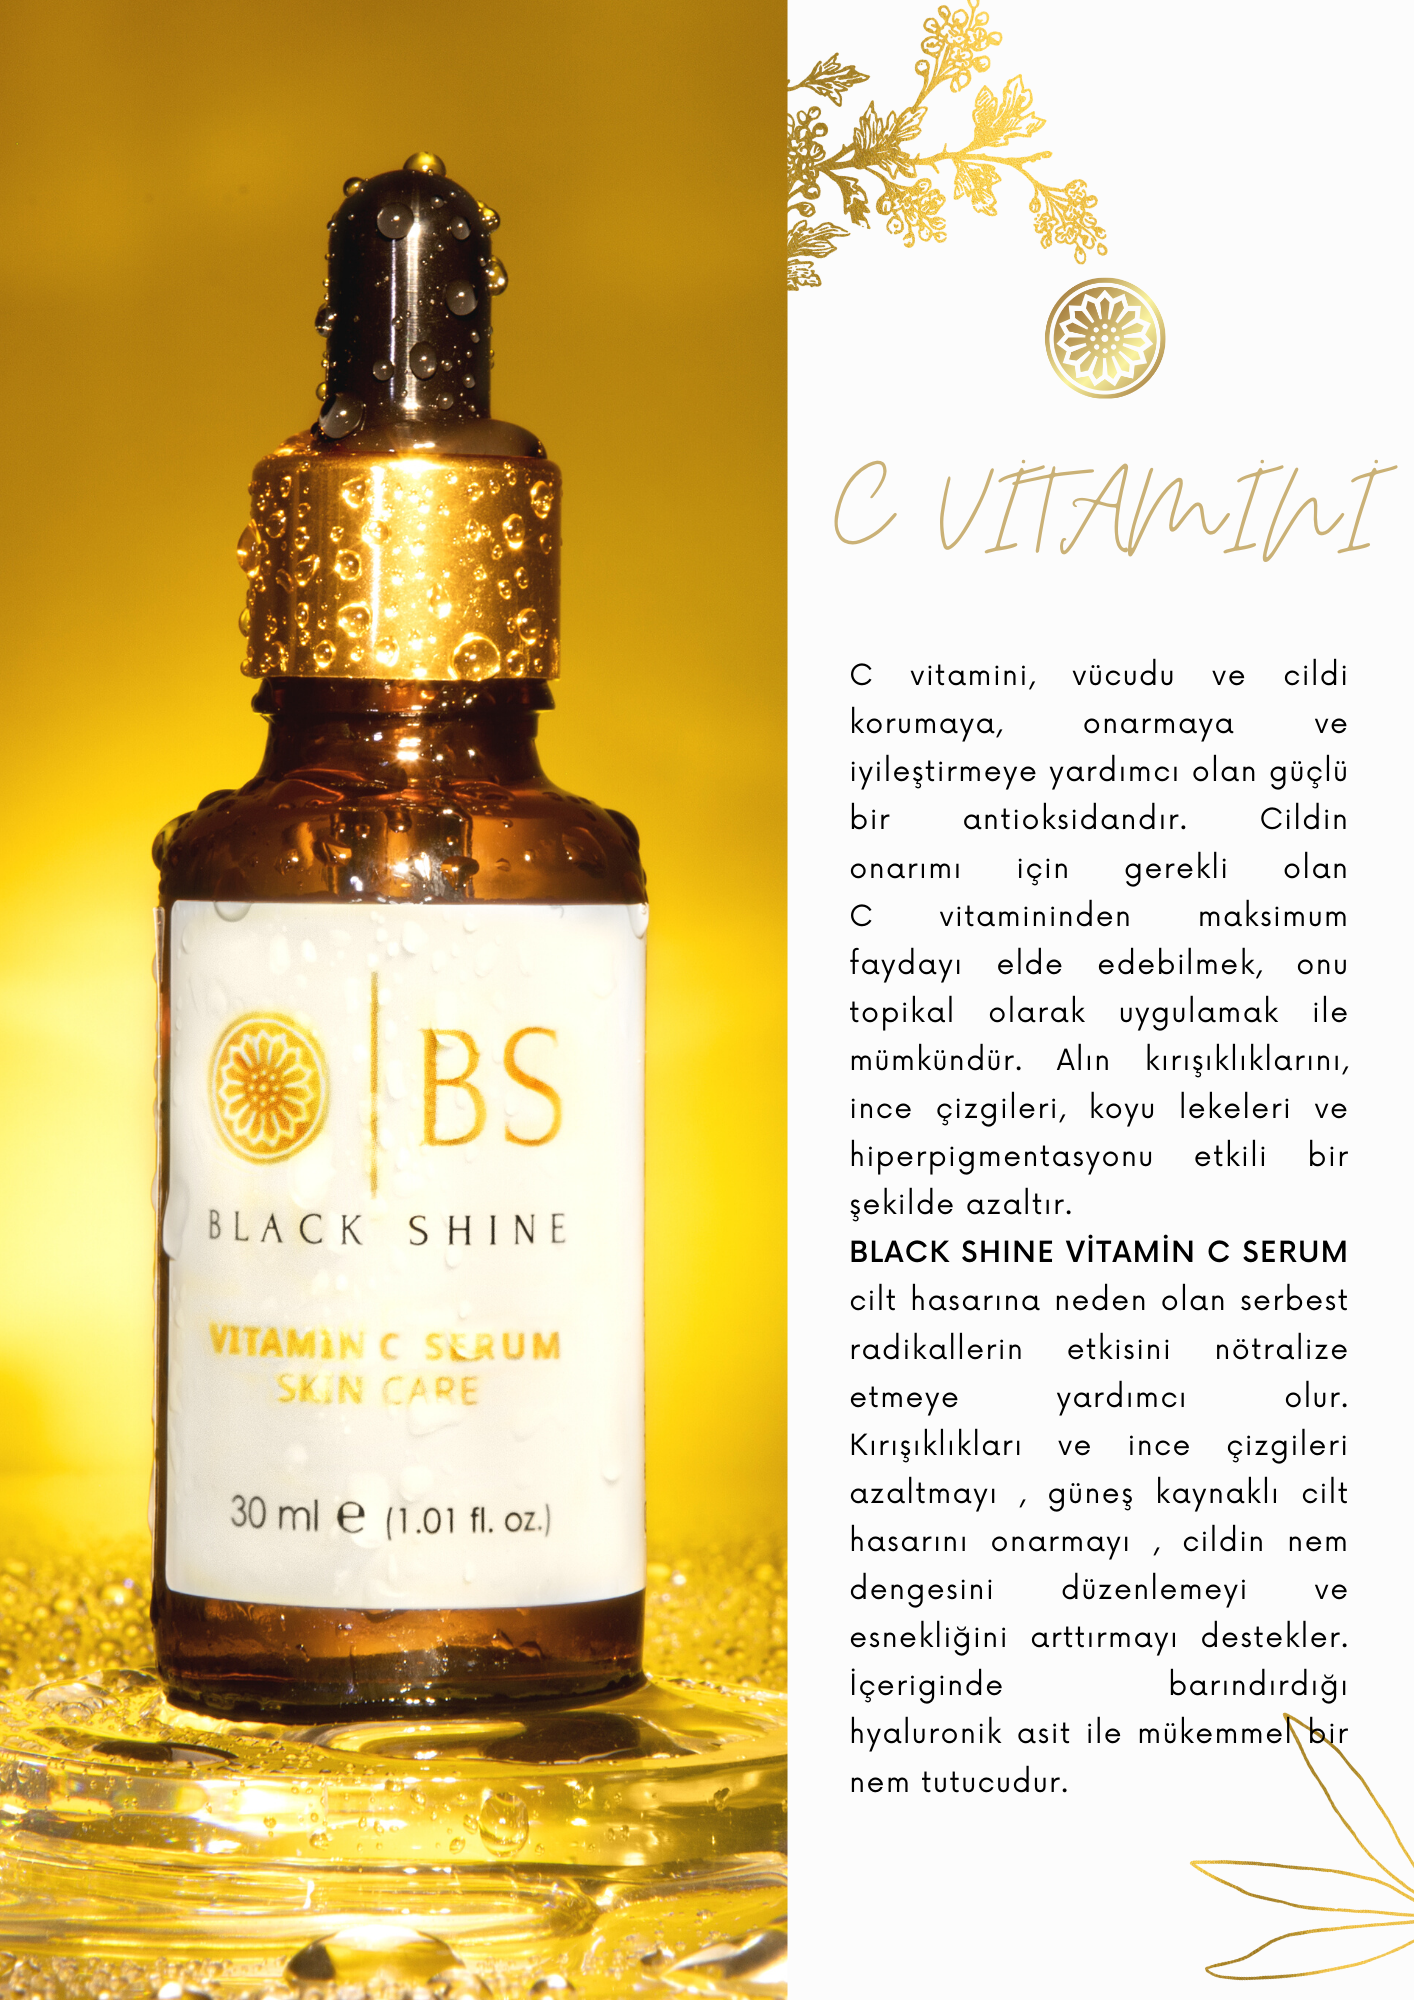 Black Shine Vitamin C Serum %20 - 30ml